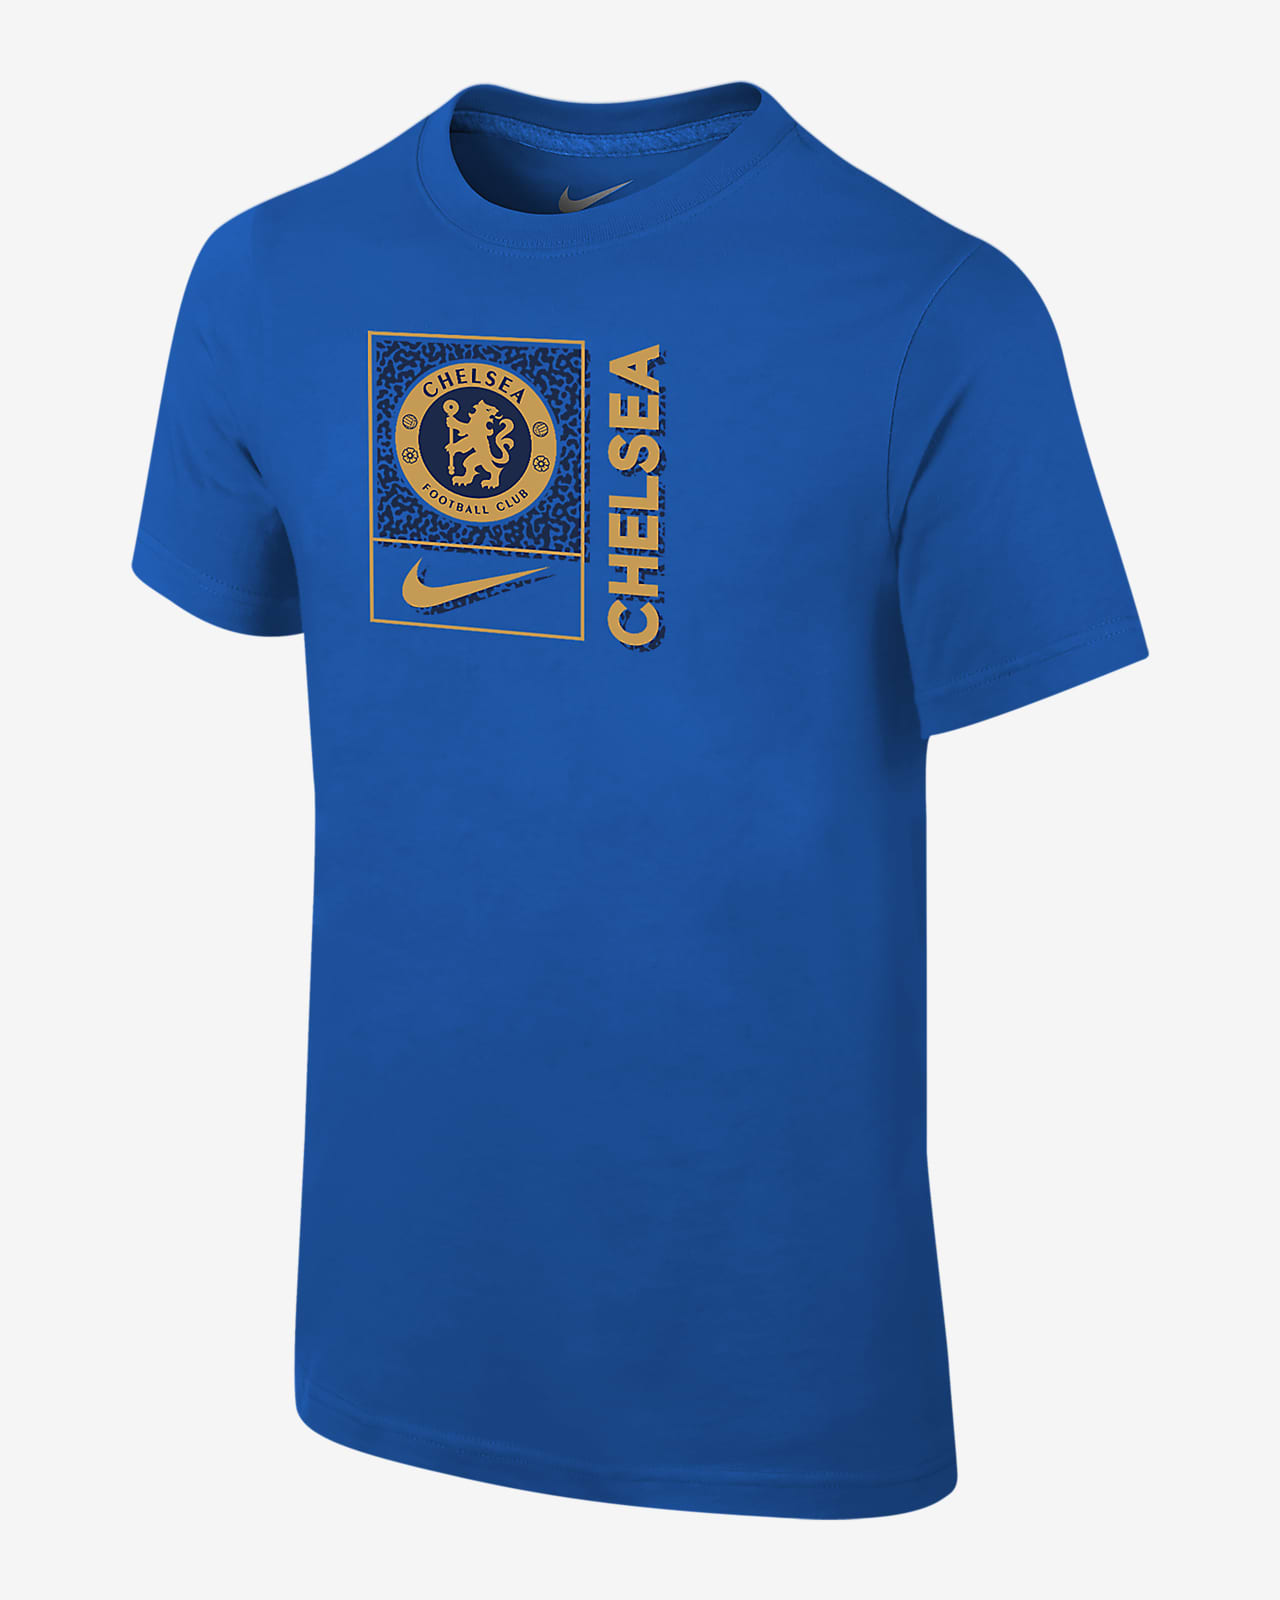 Chelsea FC Big Kids' (Boys') Nike Soccer T-Shirt